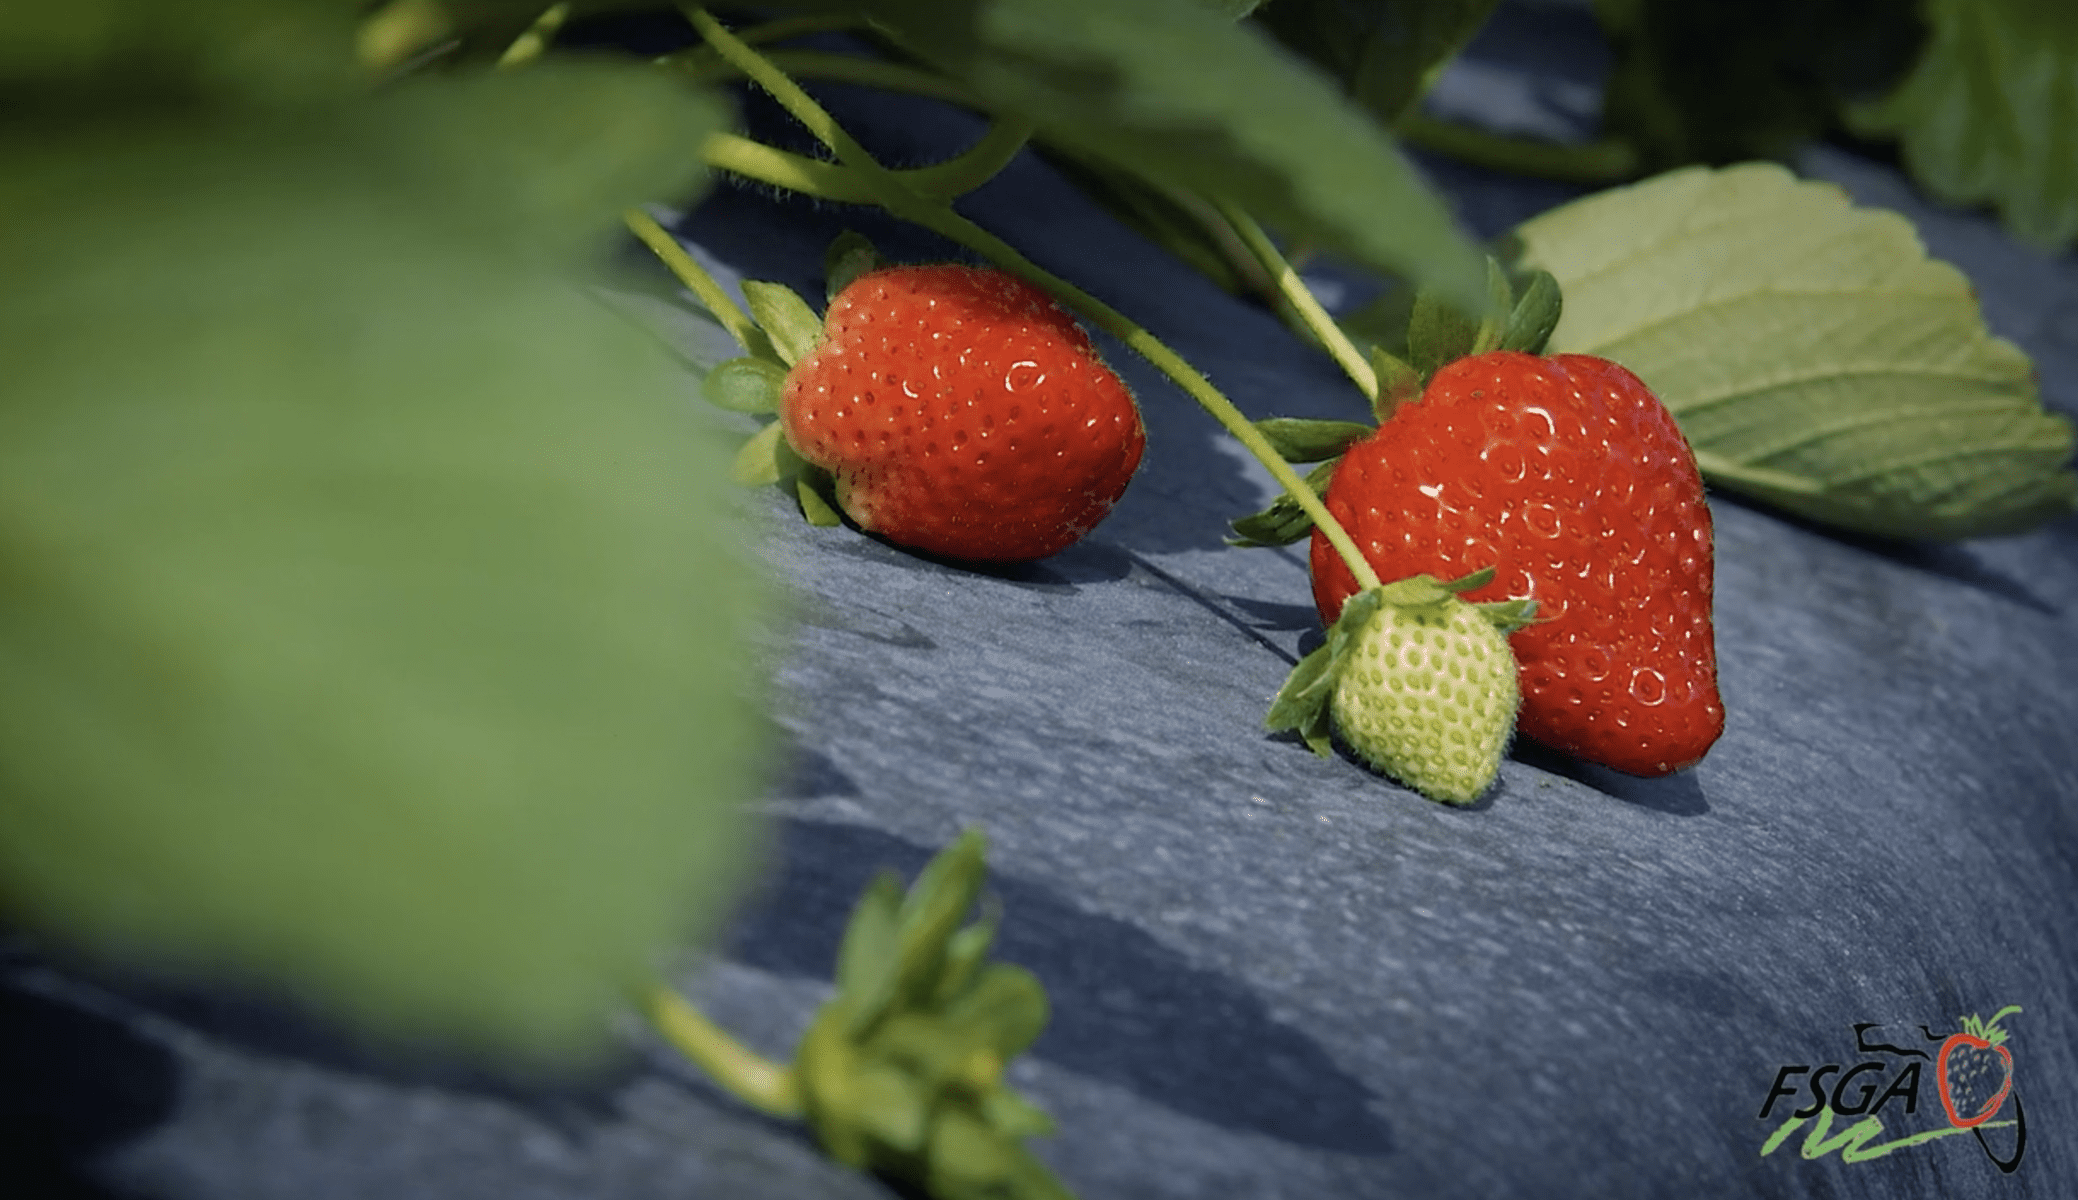 FSGA Behind-the-Scenes: Strawberry Varieties